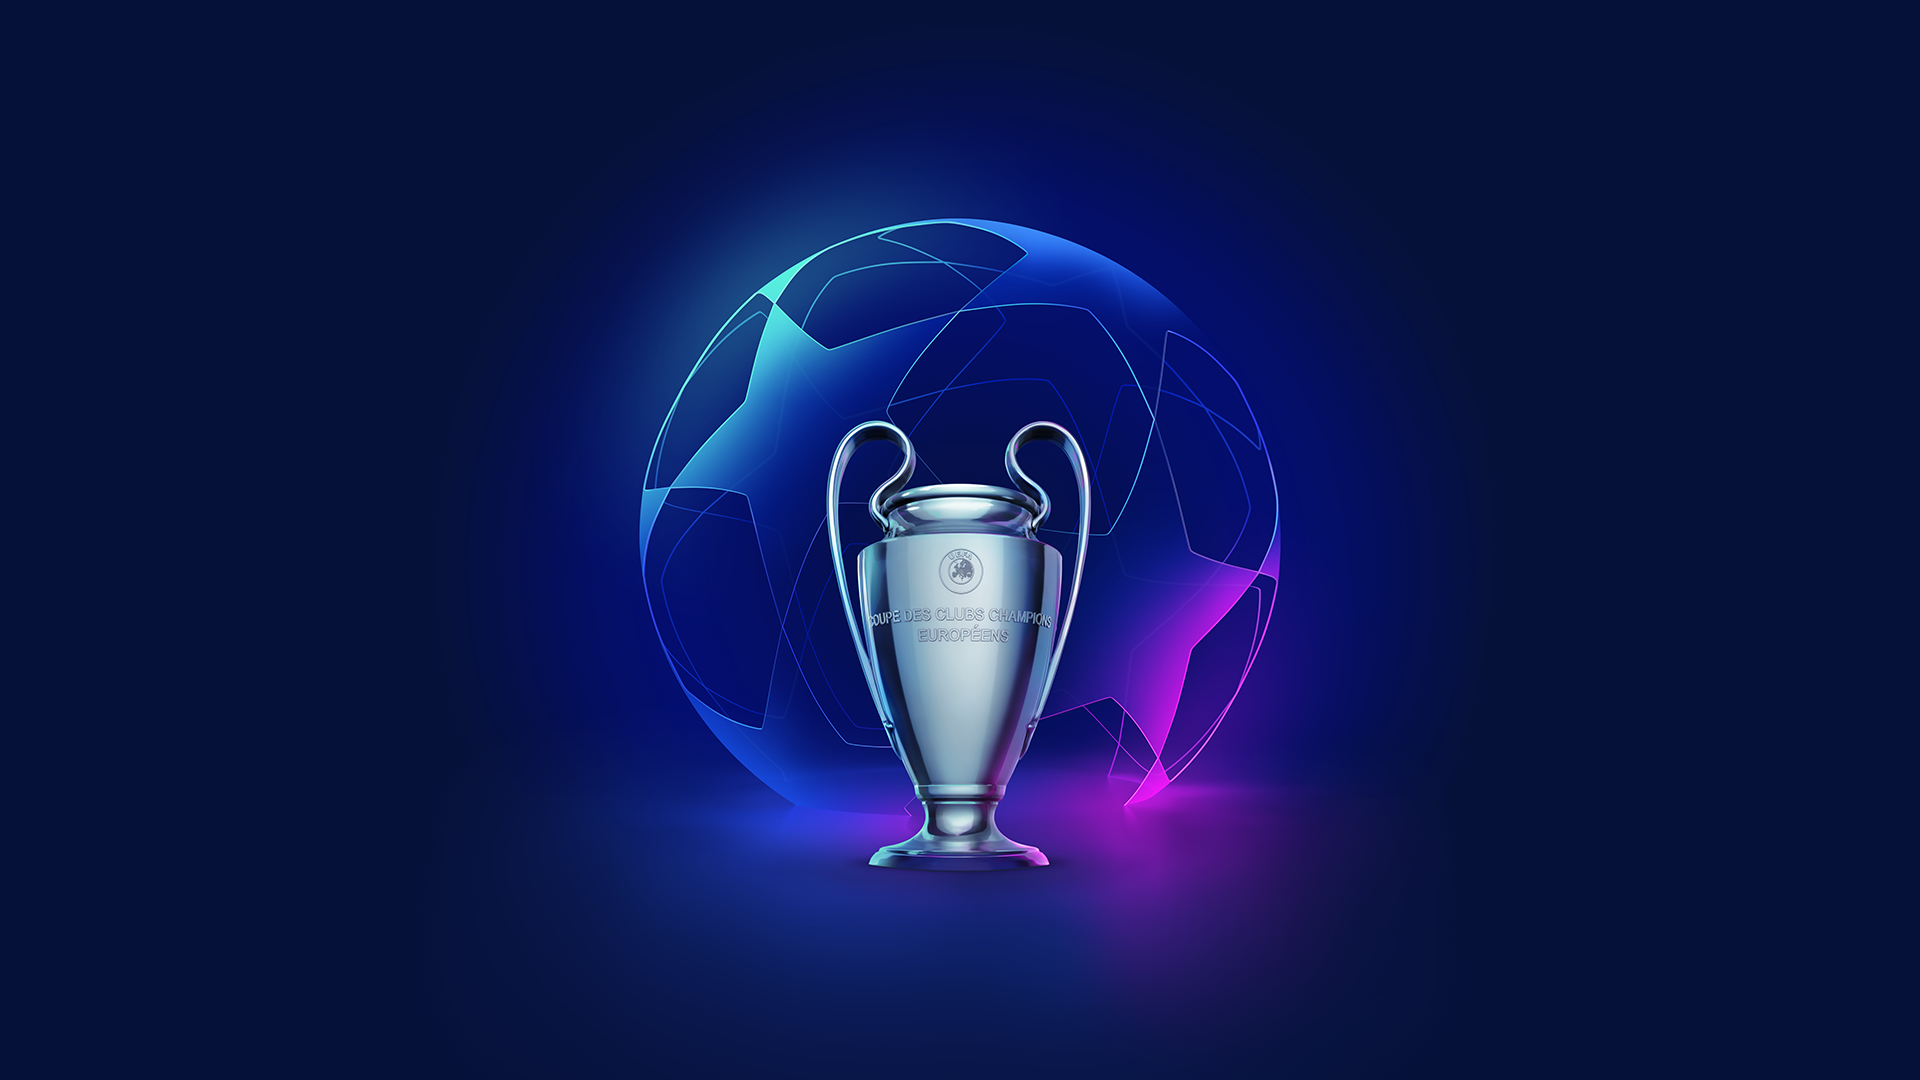 UEFA Champions League Wallpaper Free UEFA Champions League